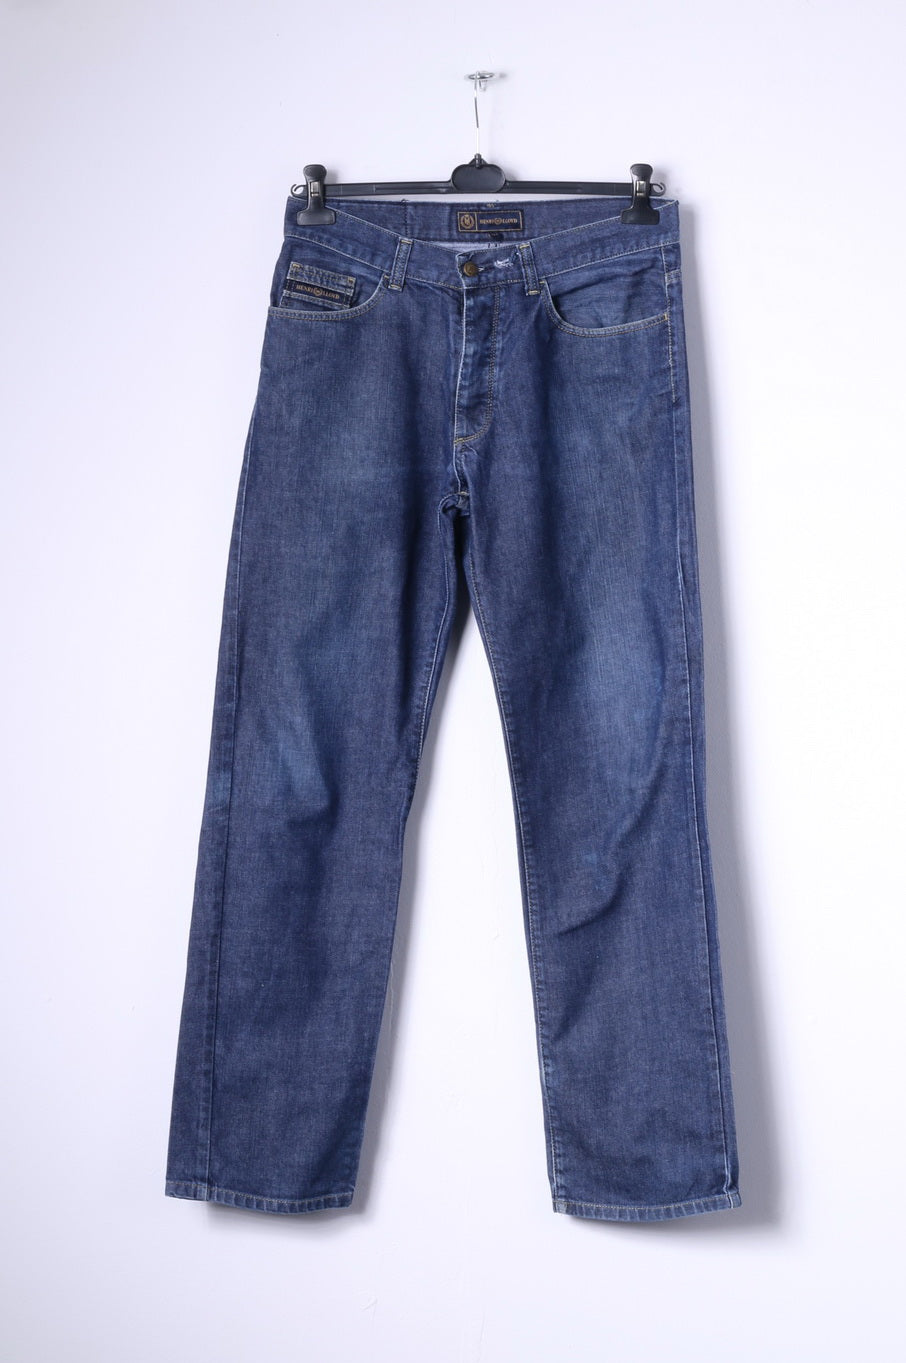 Henri Lloyd Mens 32 Jeans Trousers Navy Cotton Classic Straight Leg Denim Pants